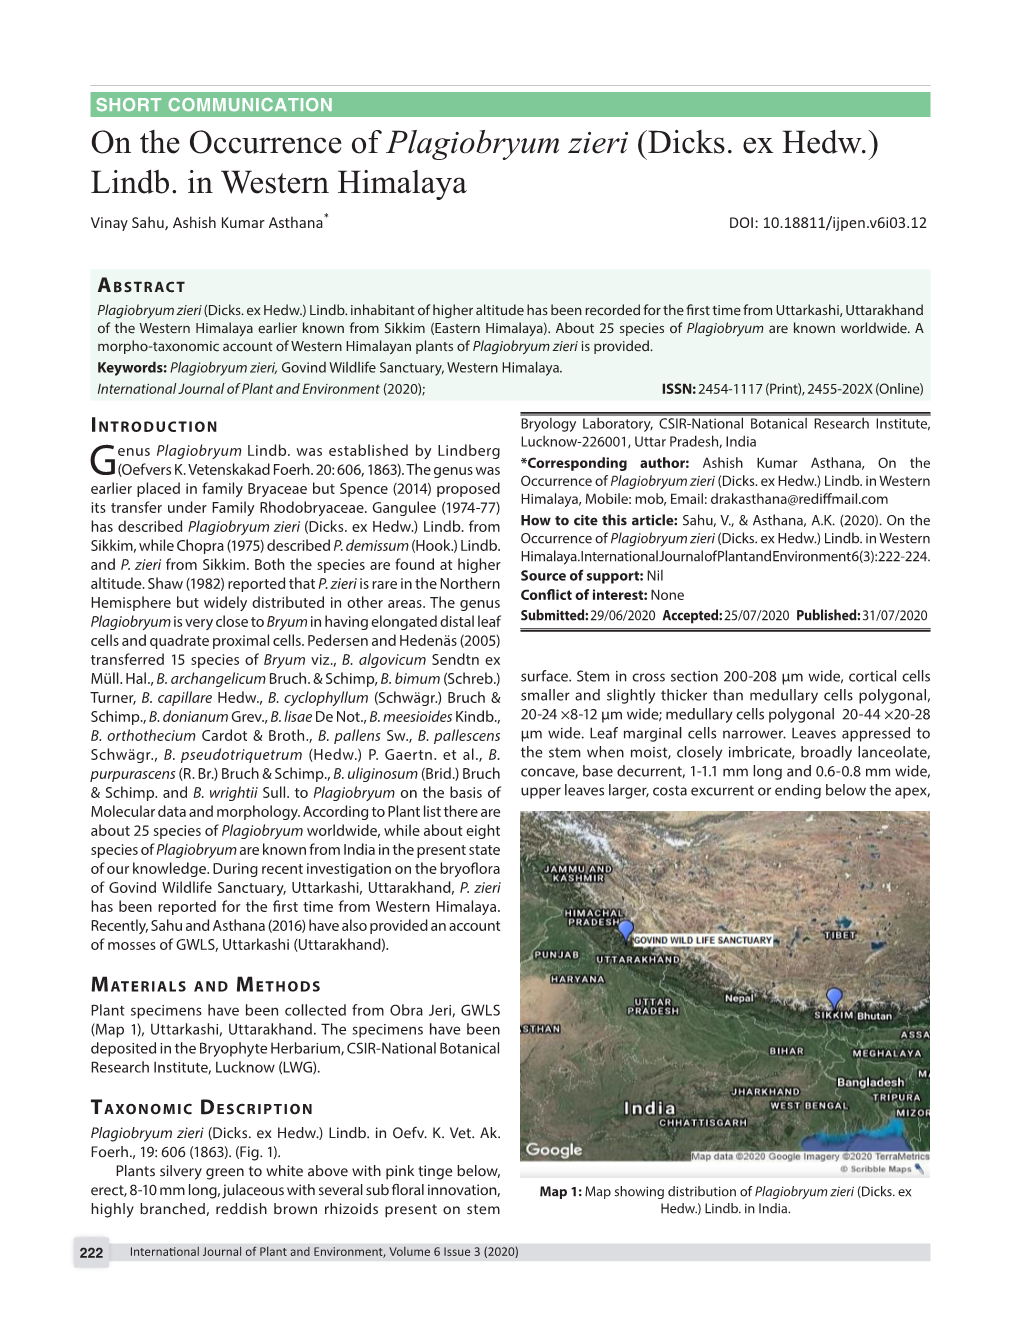 On the Occurrence of Plagiobryum Zieri (Dicks. Ex Hedw.) Lindb. in Western Himalaya Vinay Sahu, Ashish Kumar Asthana* DOI: 10.18811/Ijpen.V6i03.12